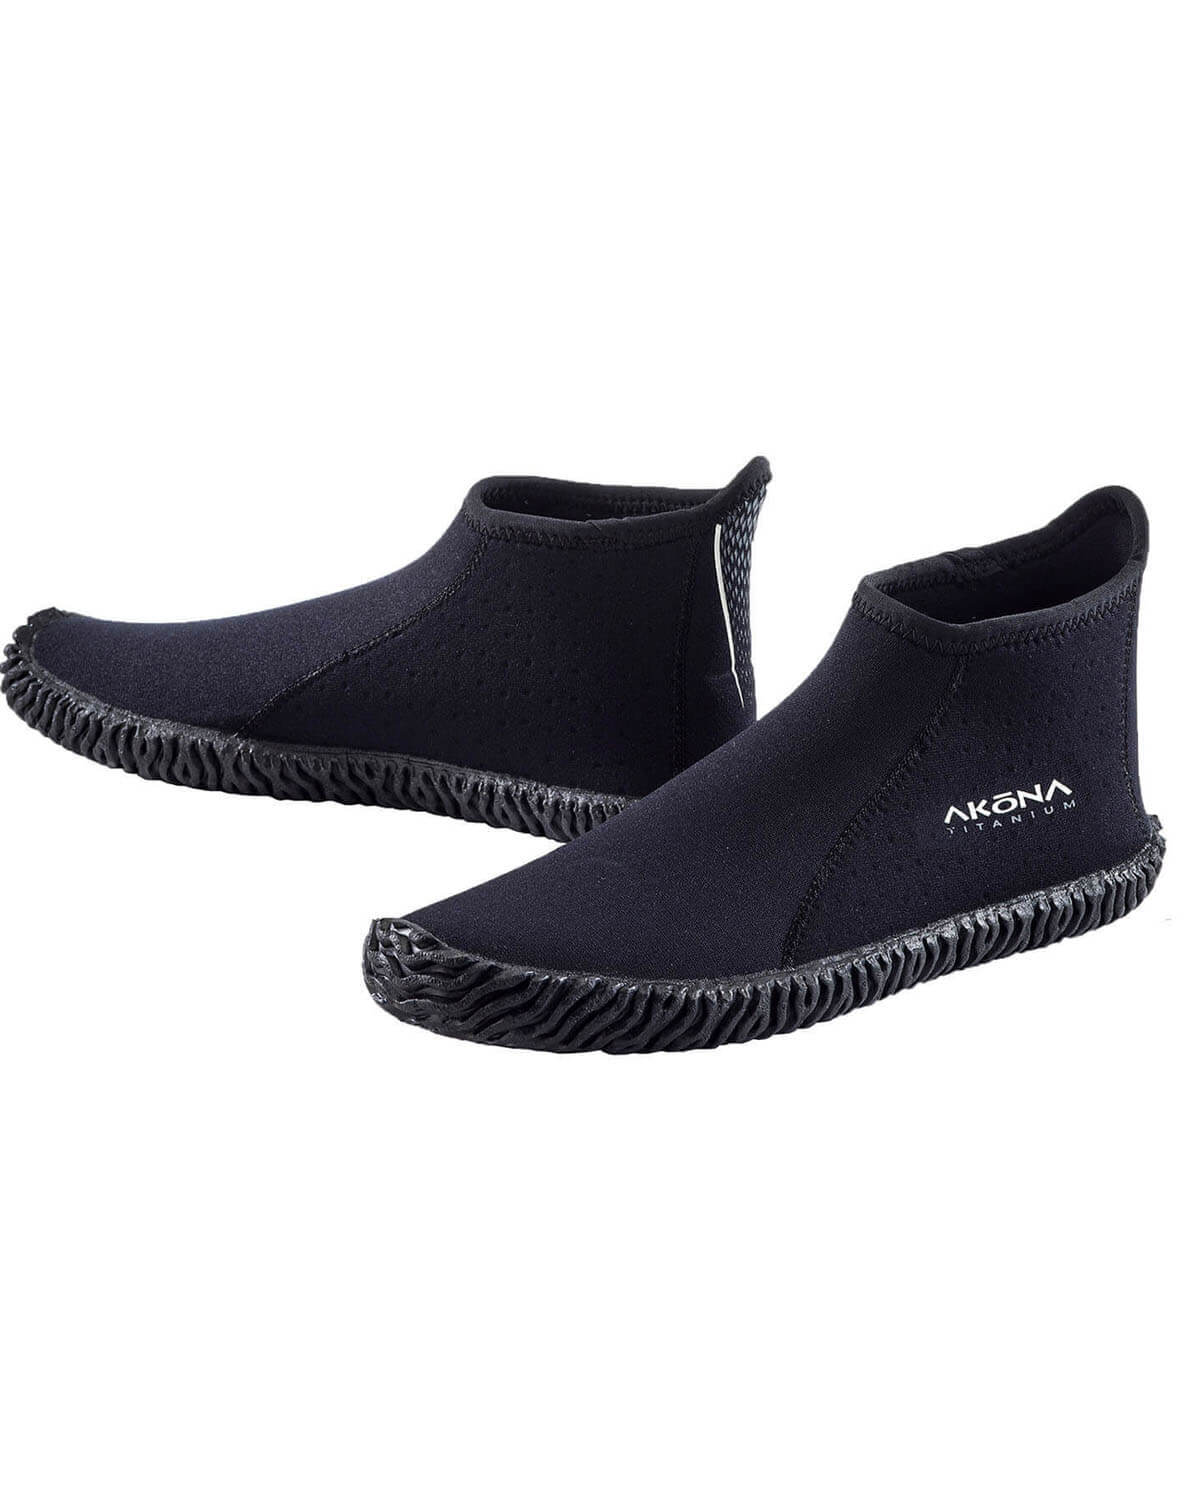 3mm AKONA Standard - Short Wetsuit Boots